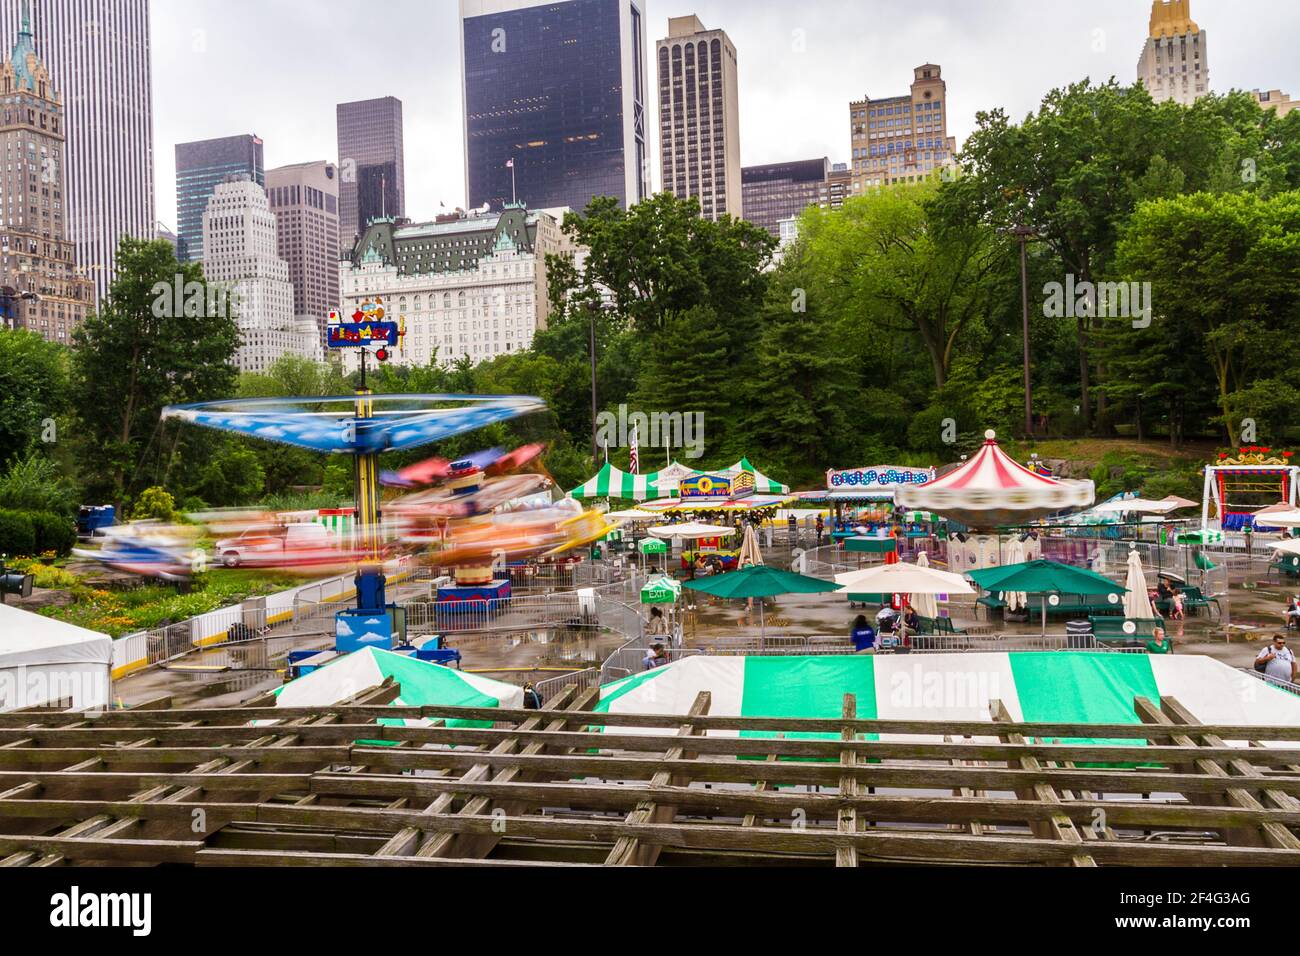 Victorian Gardens Amusement Park in Central Park Stock Photo